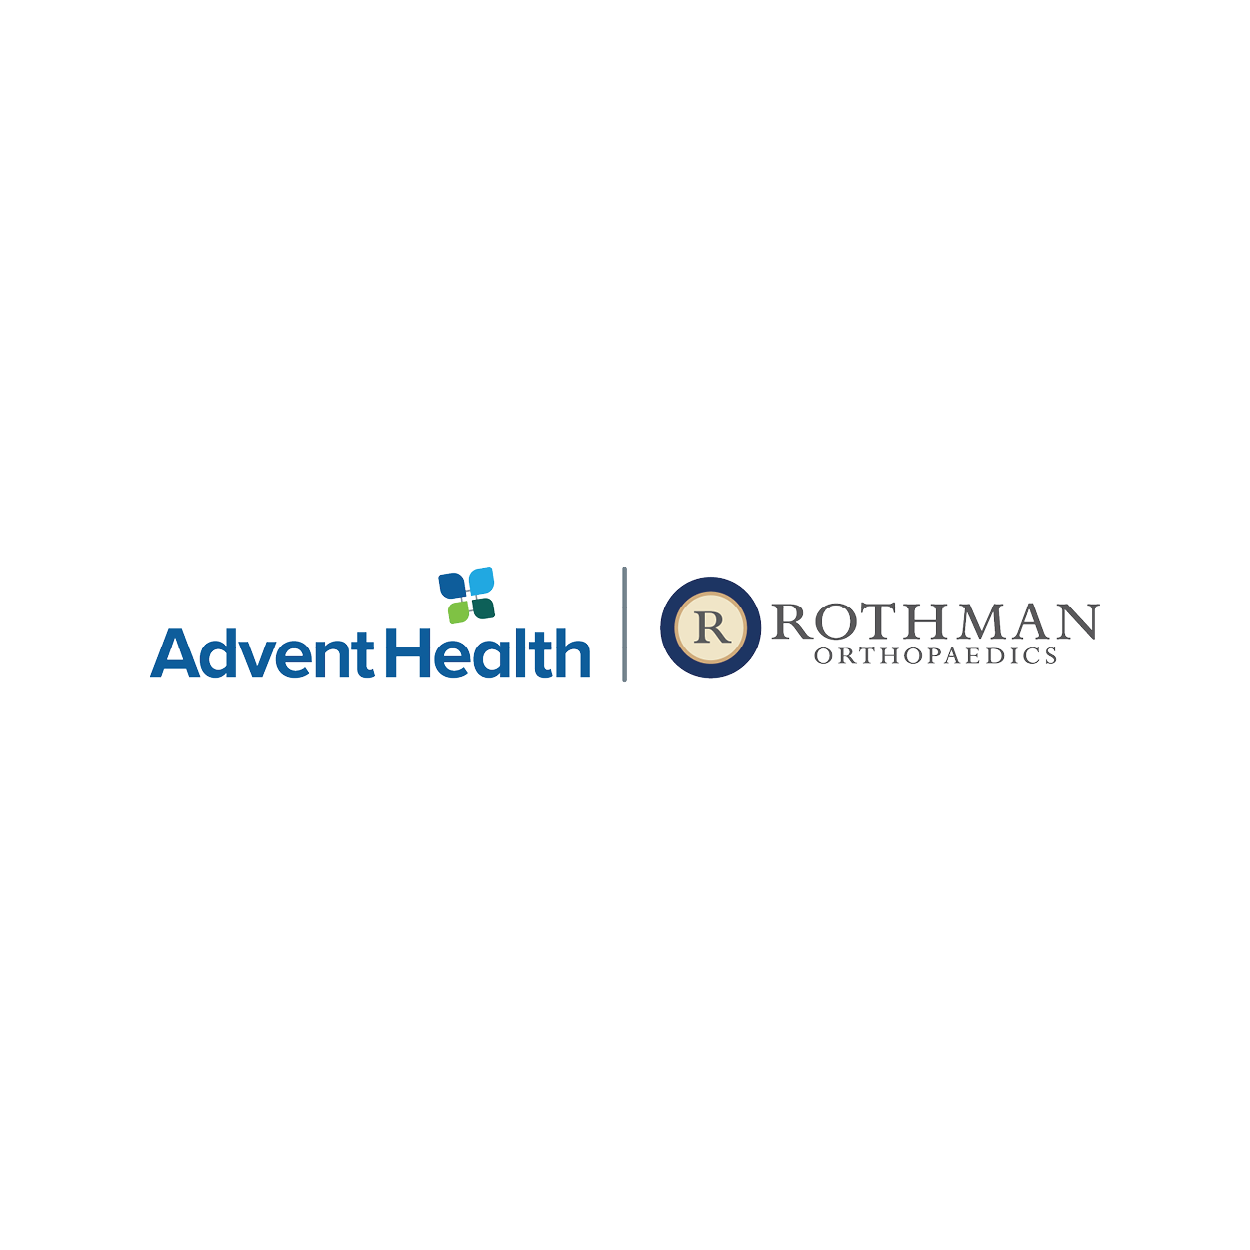 Rothman Orthopedics – AdventHealth